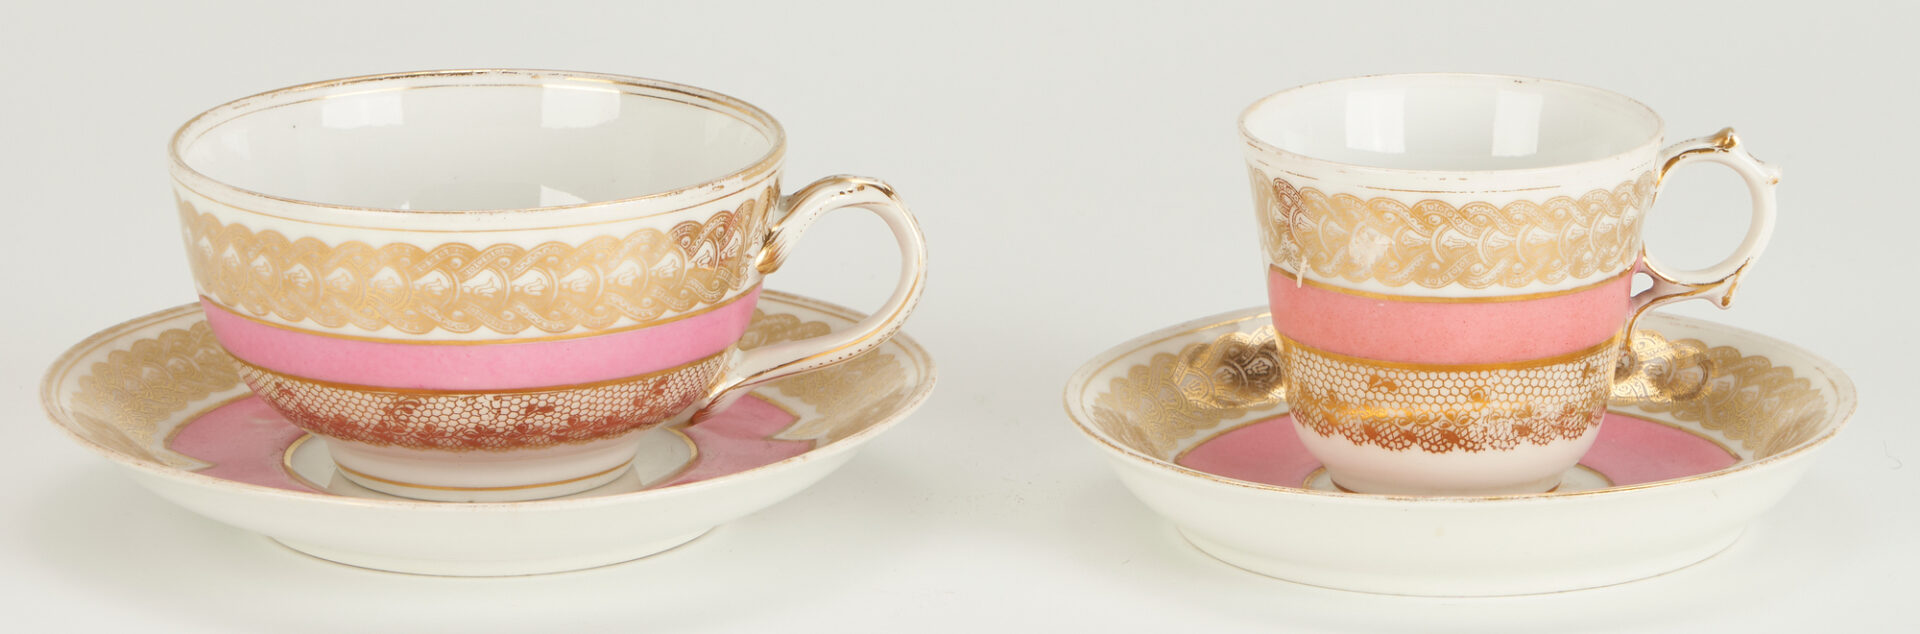 Lot 288: 106 Pcs. Sevres Mace Pink & Gilt Porcelain Dinnerware Set